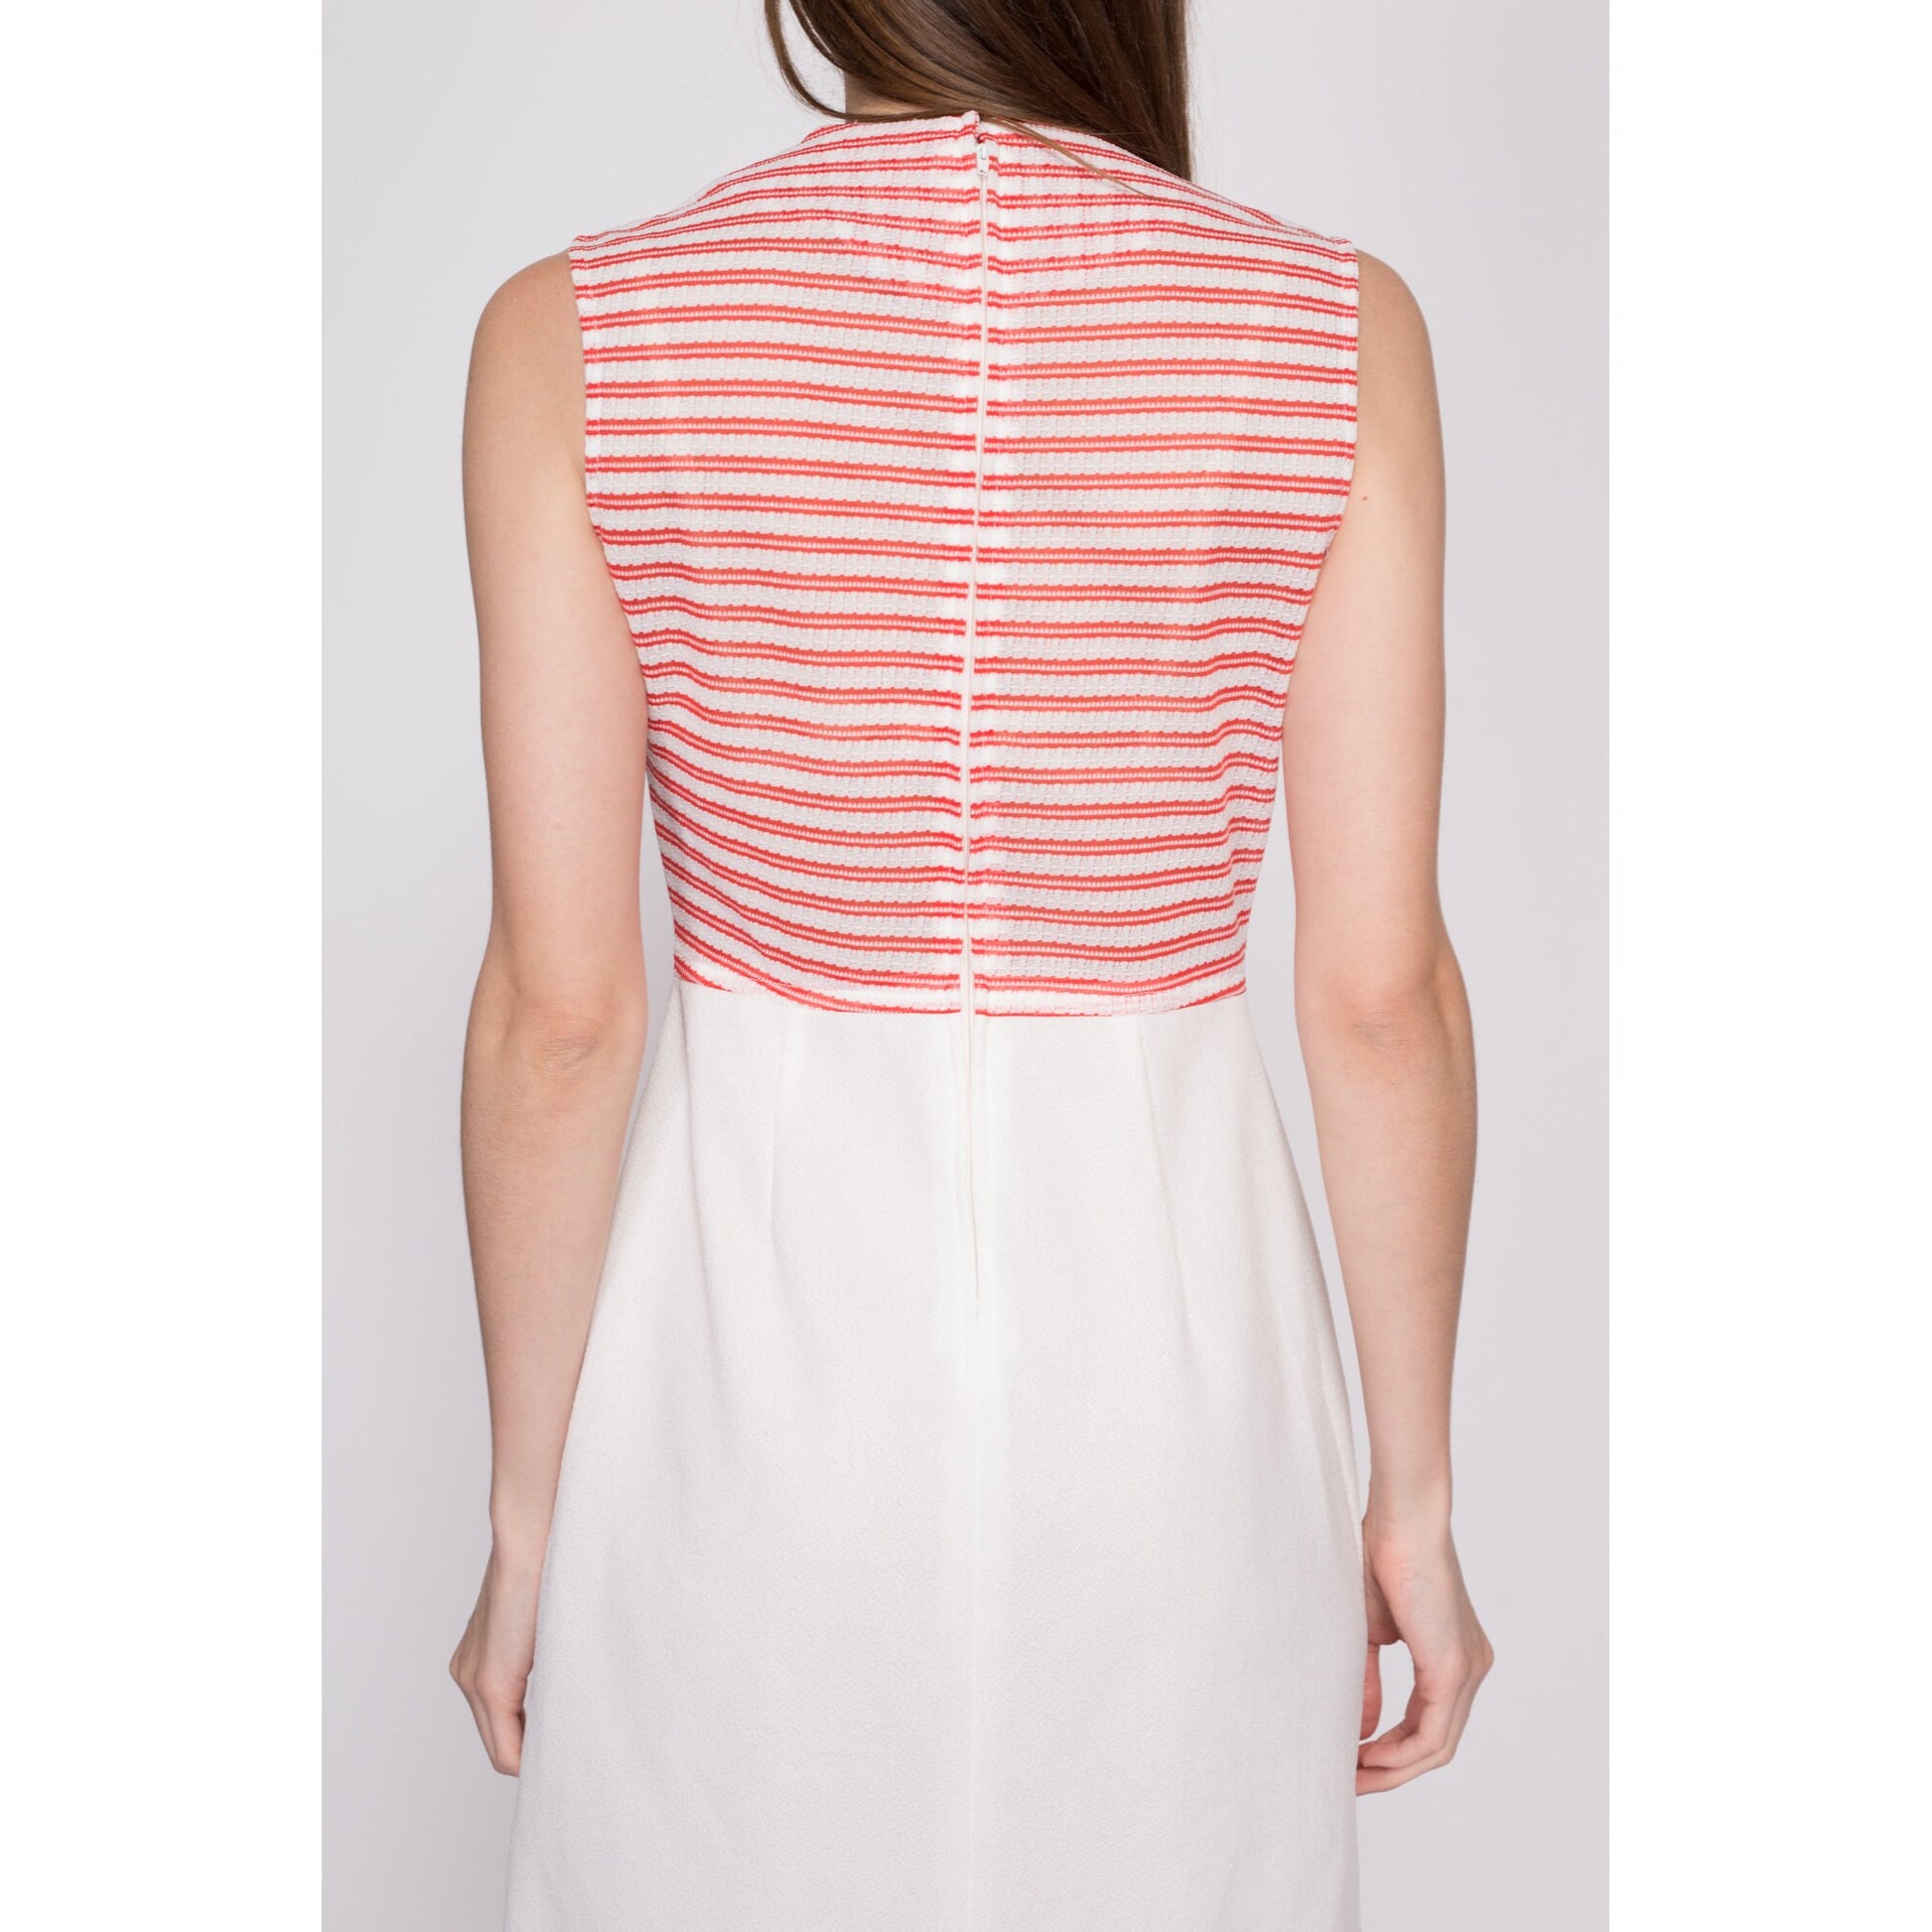 S| 60s Red & White Mod Mini Dress - Small | Vintage Knit Two Tone Retro Knee Length Sleeveless Dress